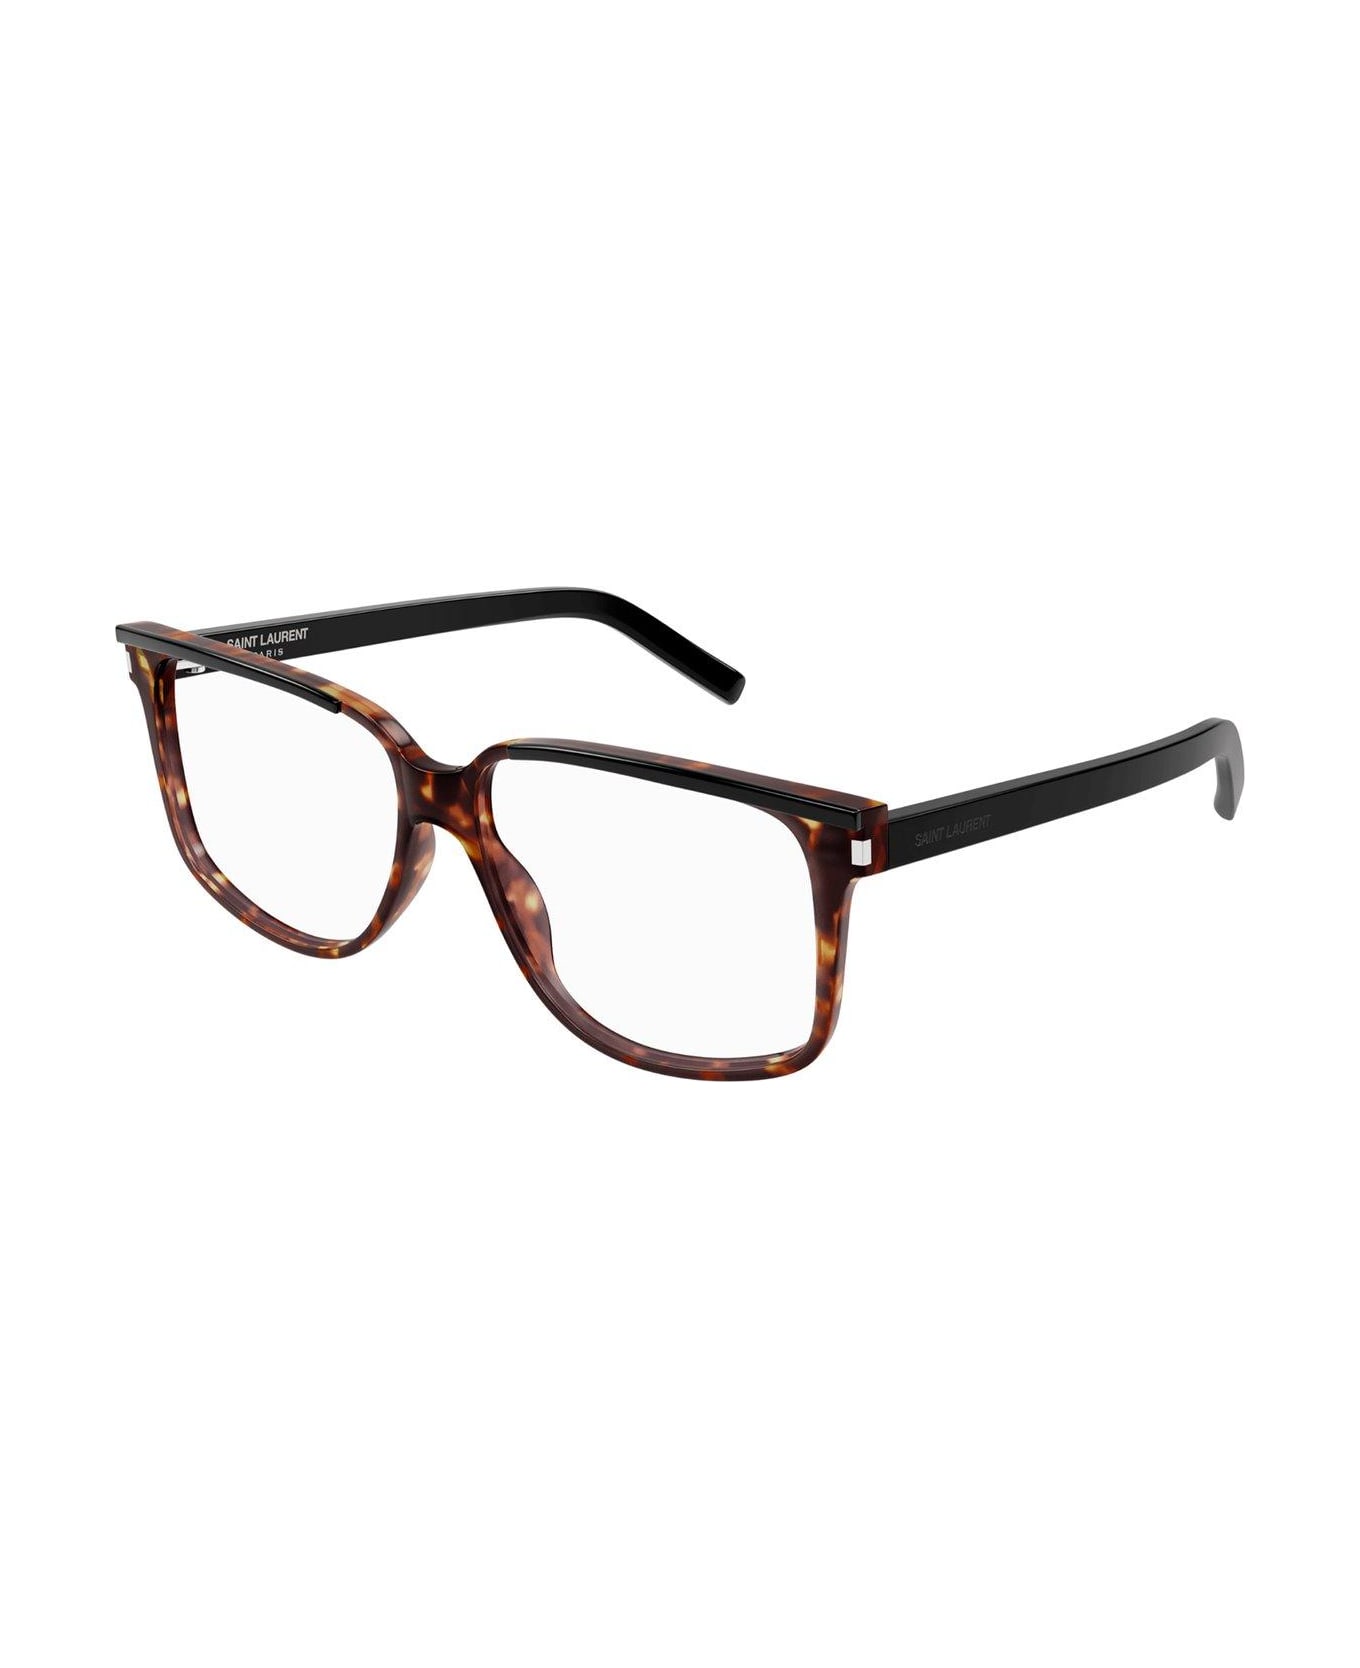 Saint Laurent Eyewear Square Frame Glasses - 001 black black transpare アイウェア